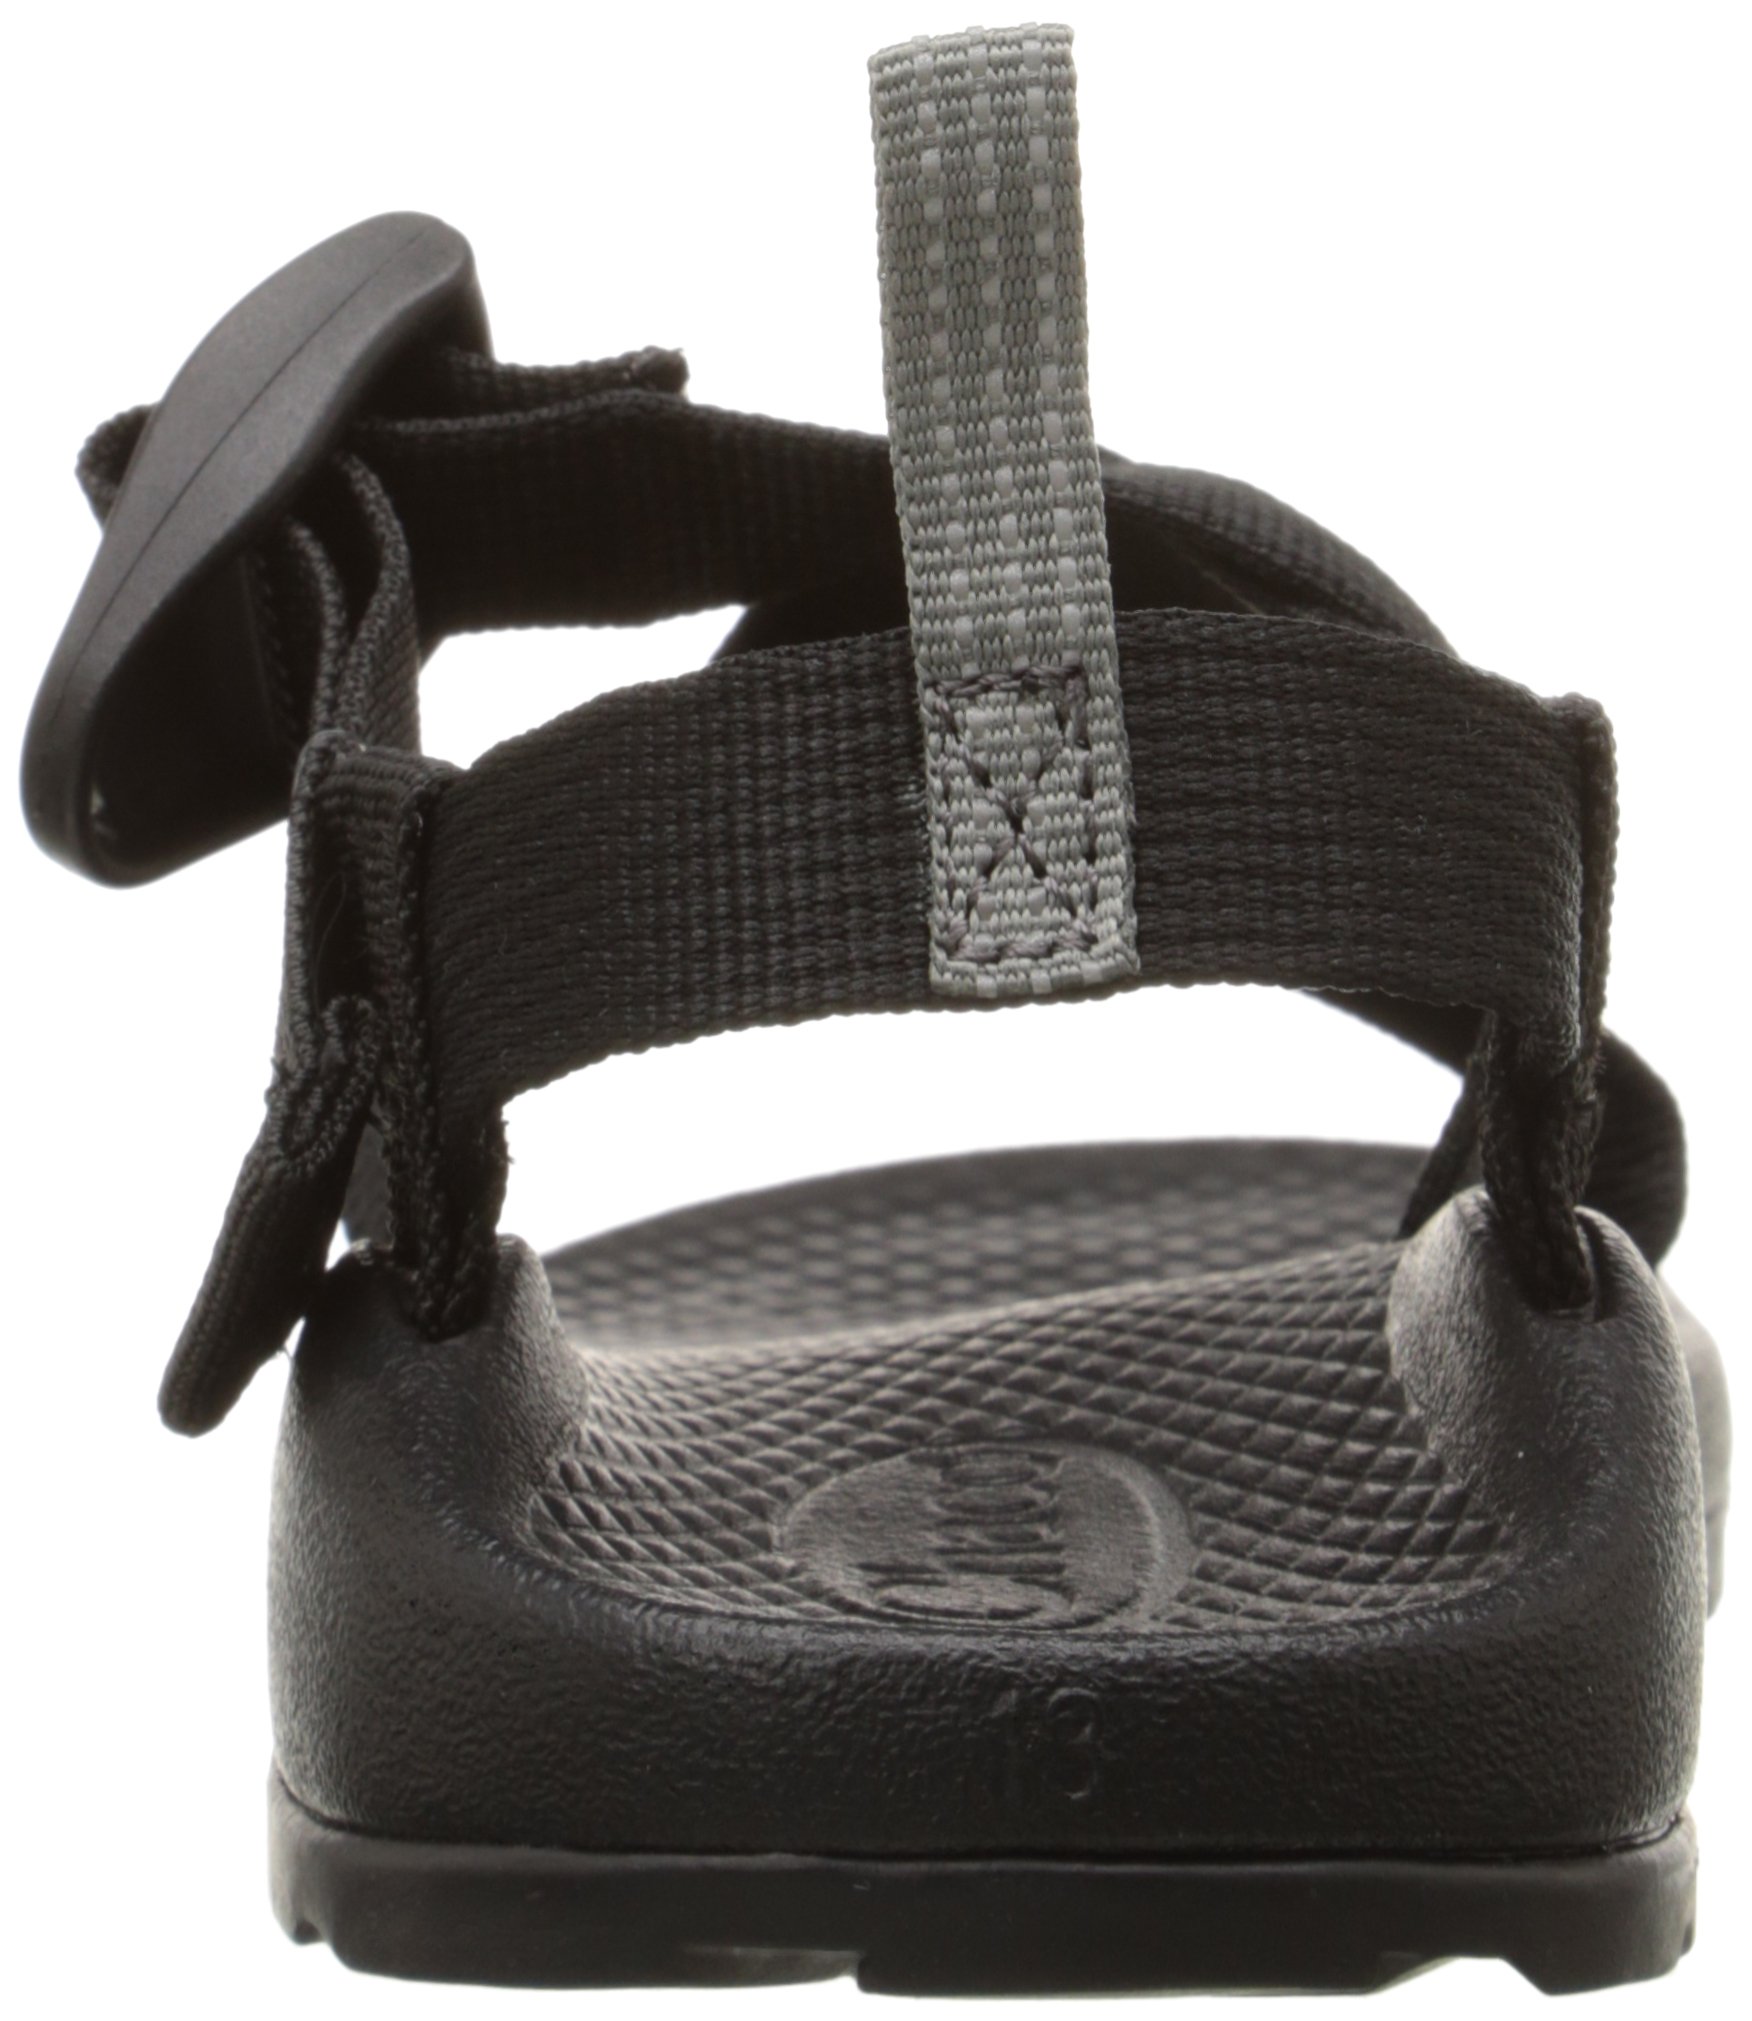 Chaco Unisex-Child Z1 Ecotread Sandal